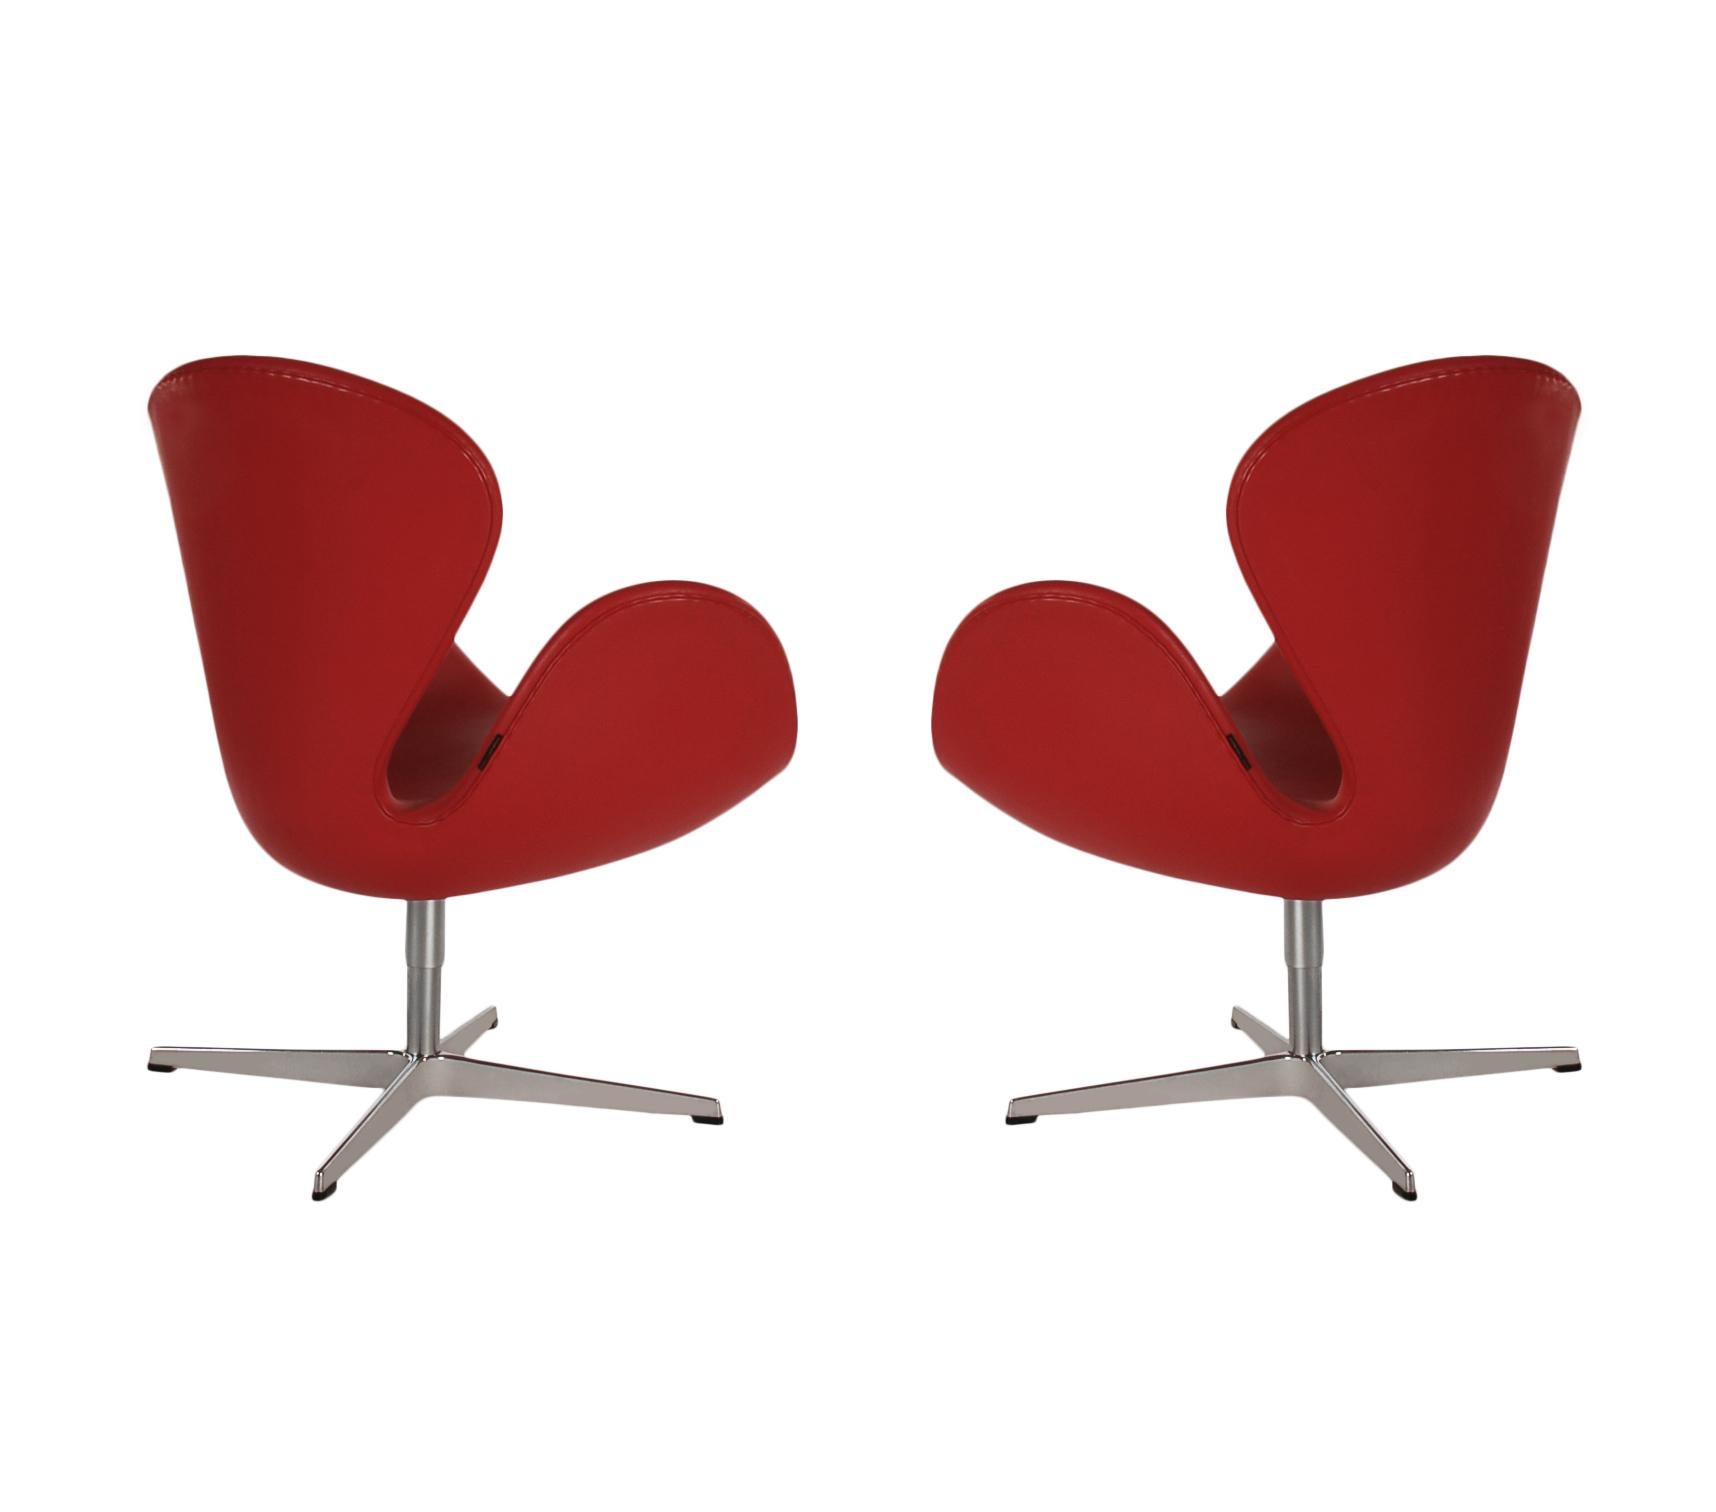 Scandinavian Modern Midcentury Danish Modern Pair of Red Leather Swivel Swan Chairs / Arne Jacobsen